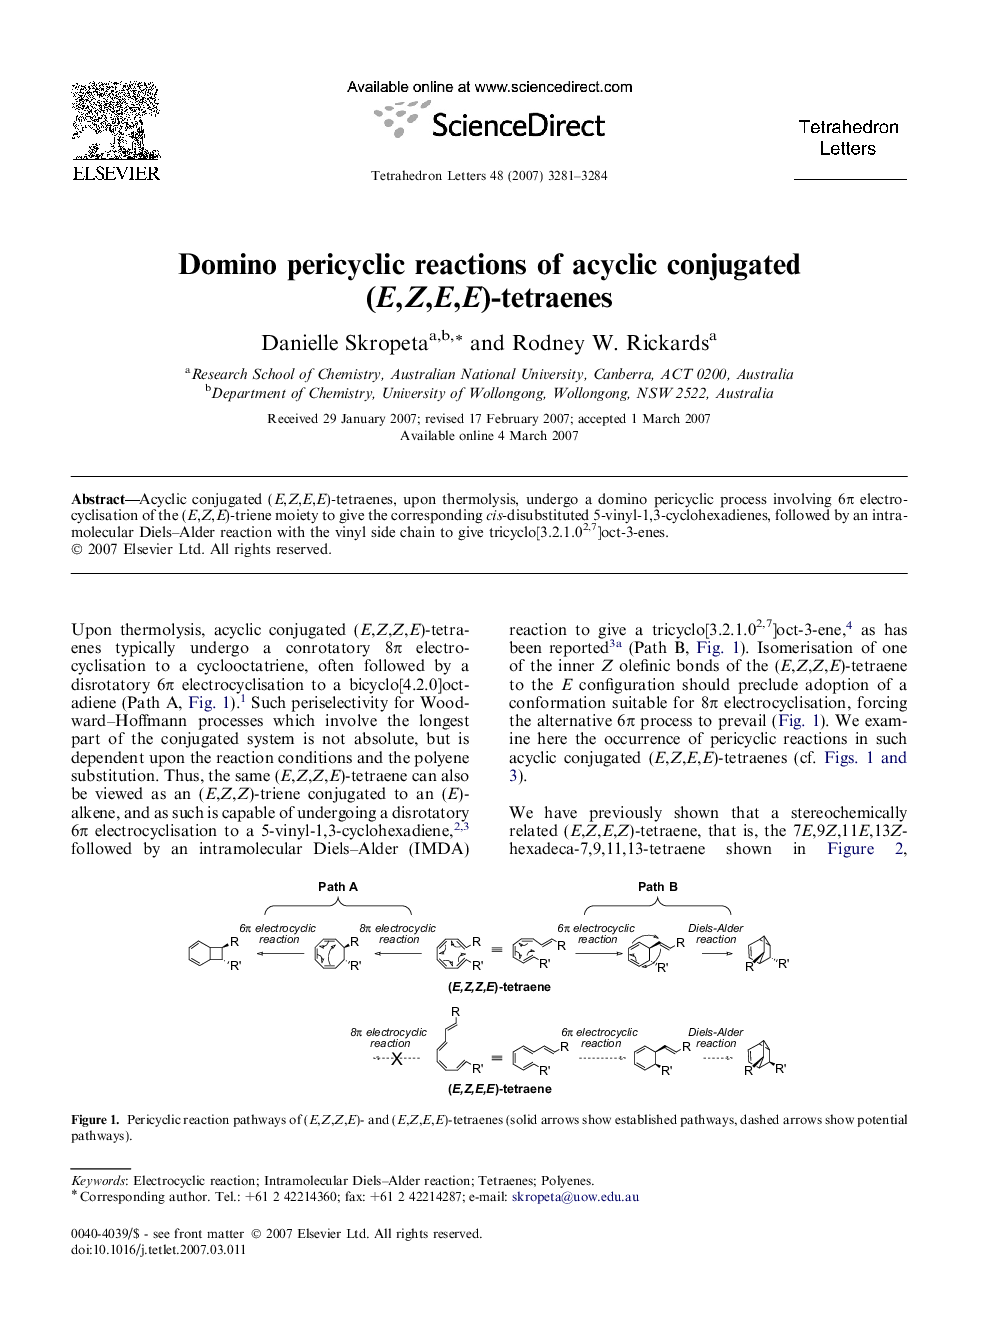 Domino pericyclic reactions of acyclic conjugated (E,Z,E,E)-tetraenes